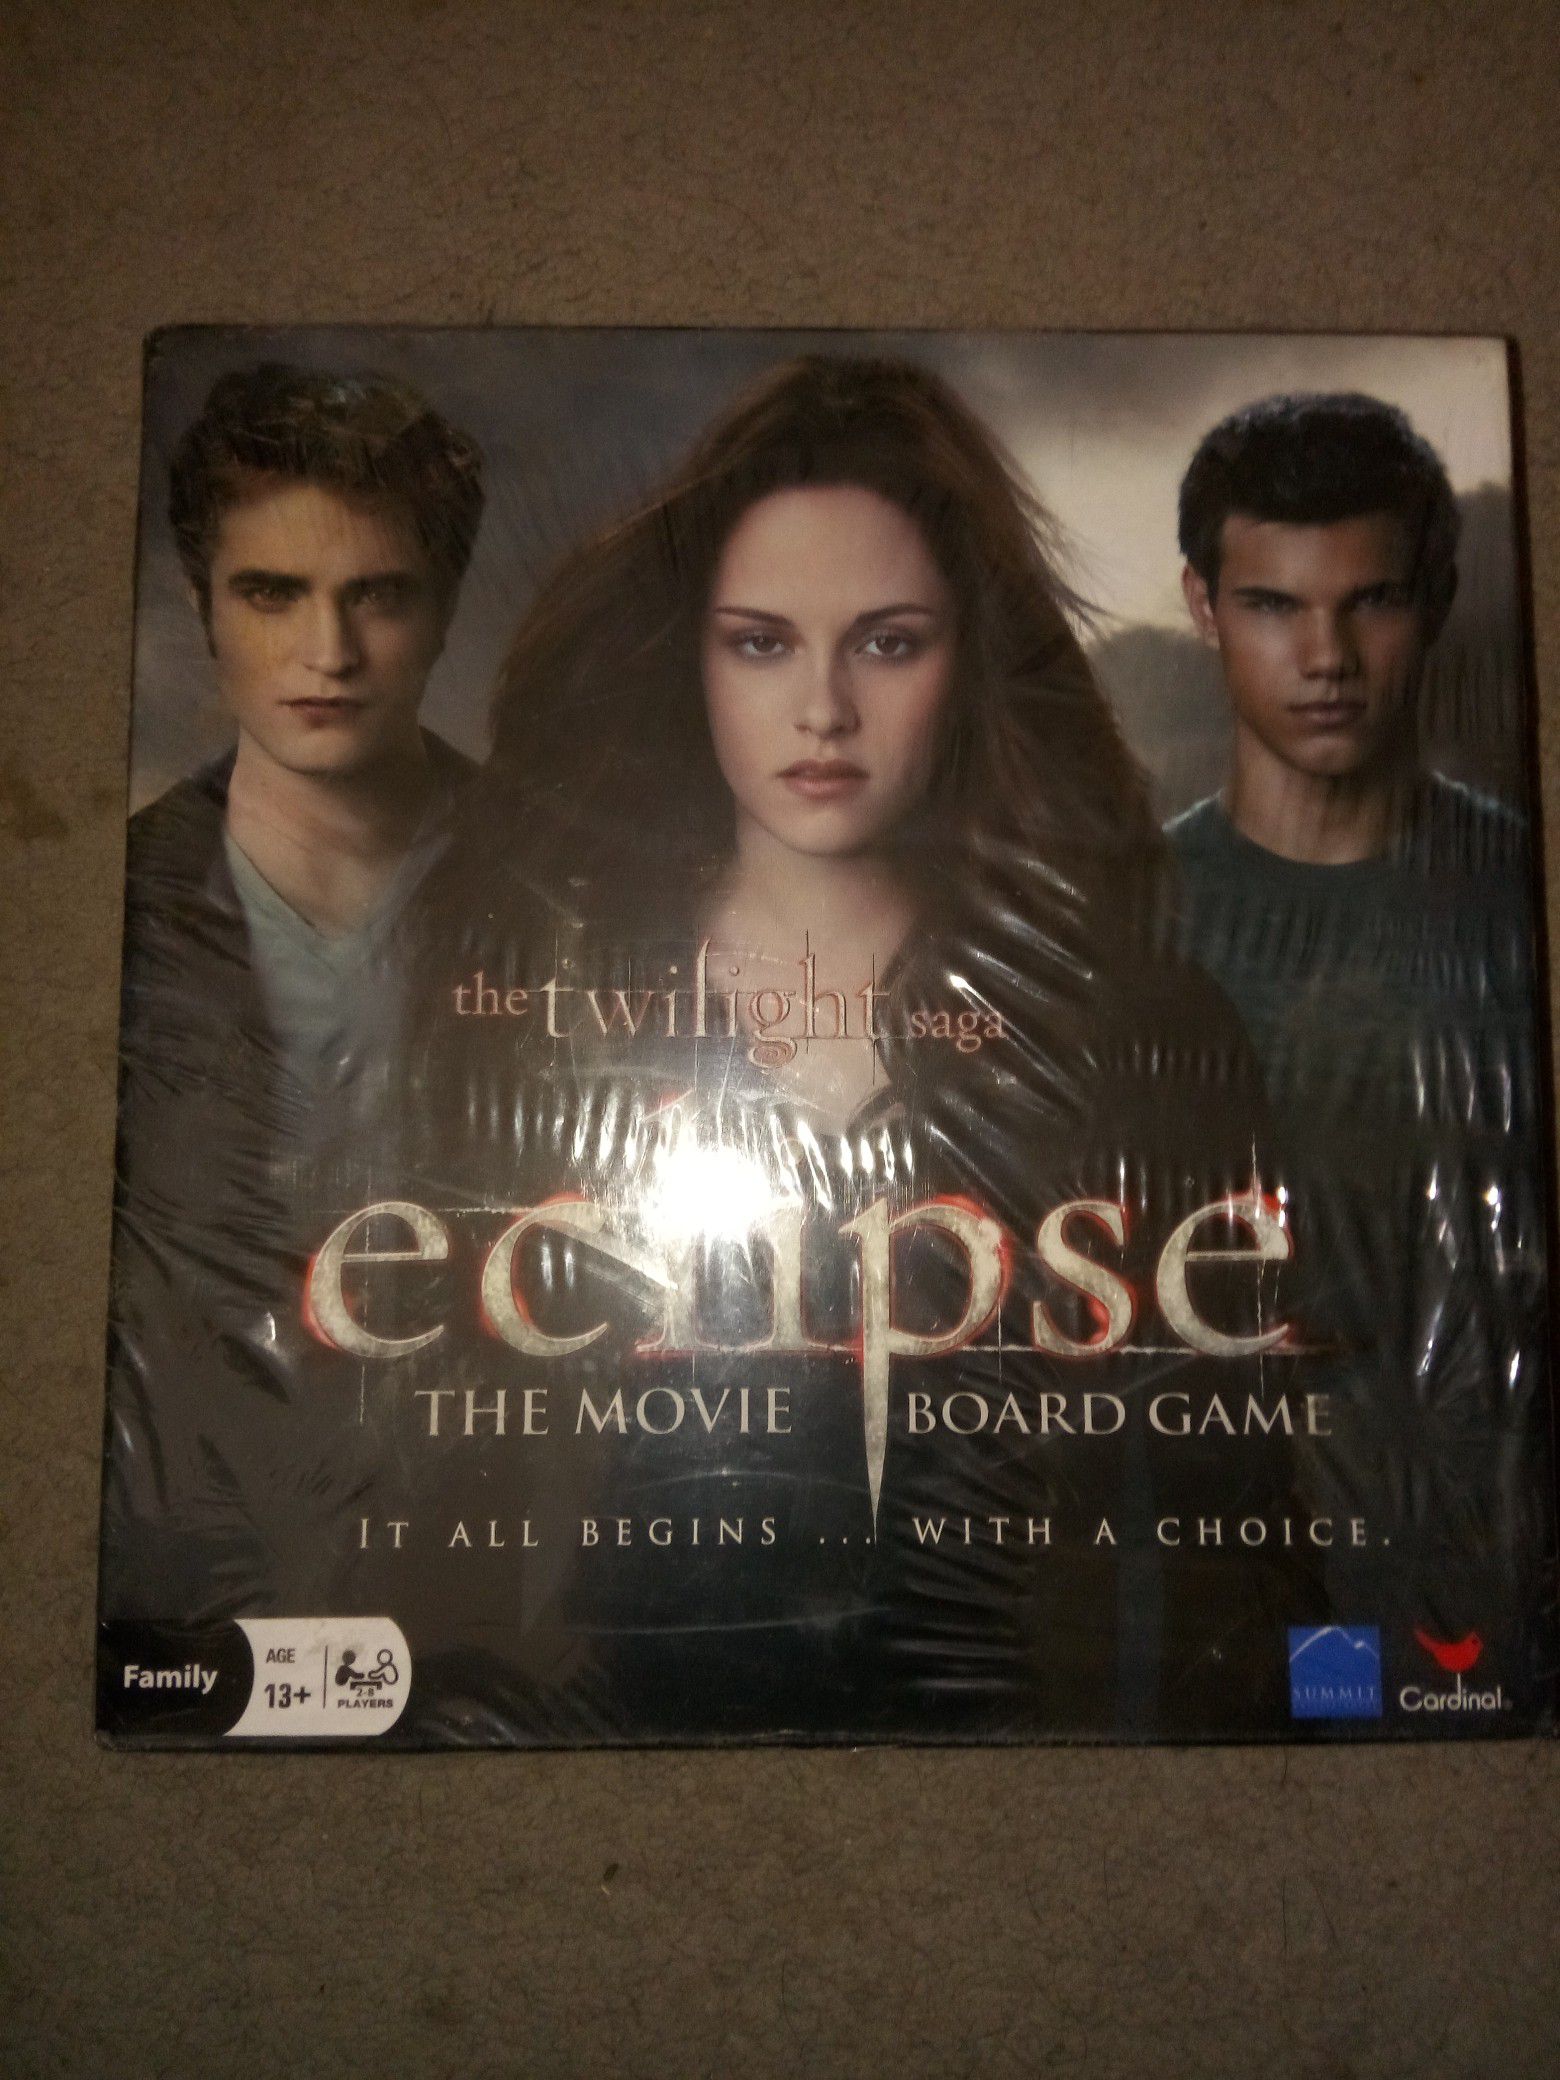 Eclipse board game